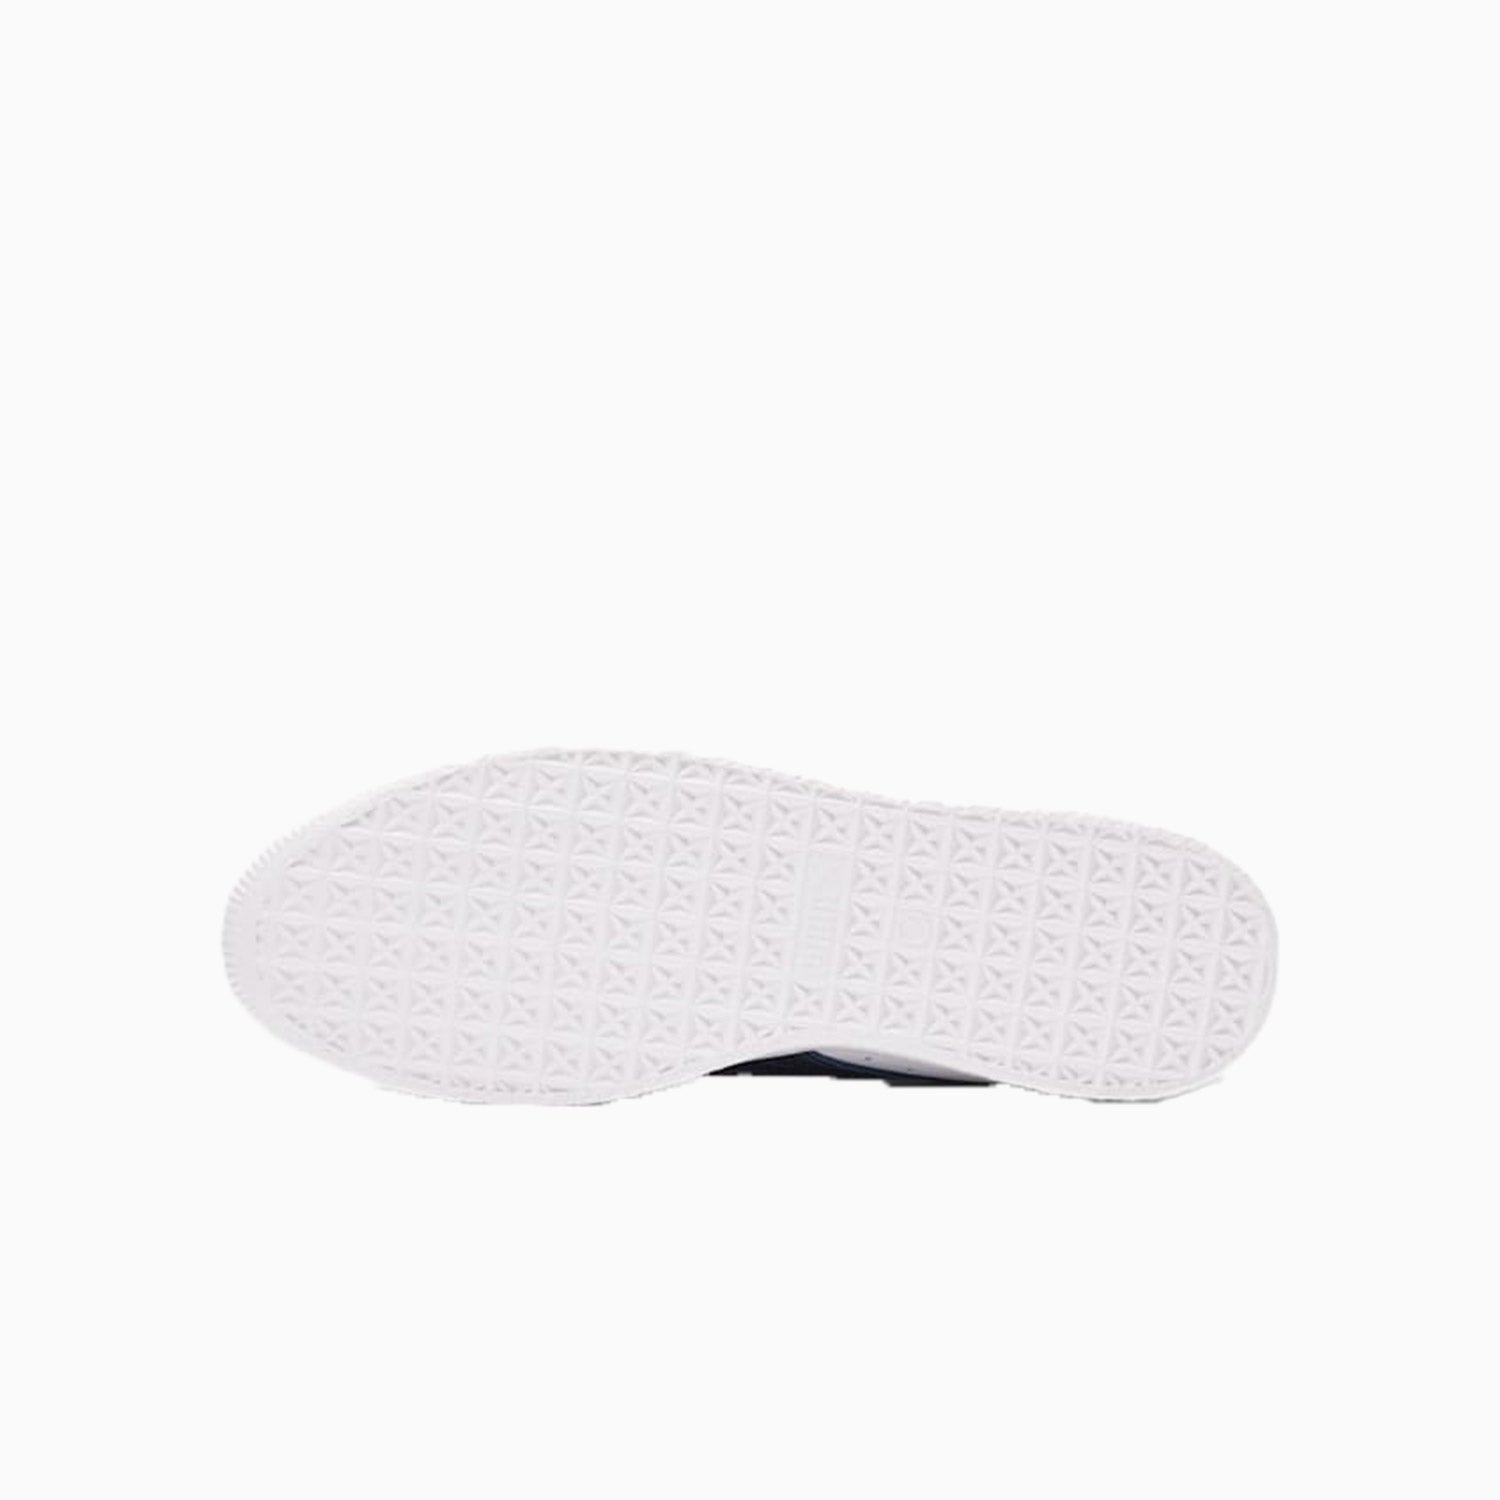 puma-mens-clyde-core-foil-sneakers-shoes-364669-02